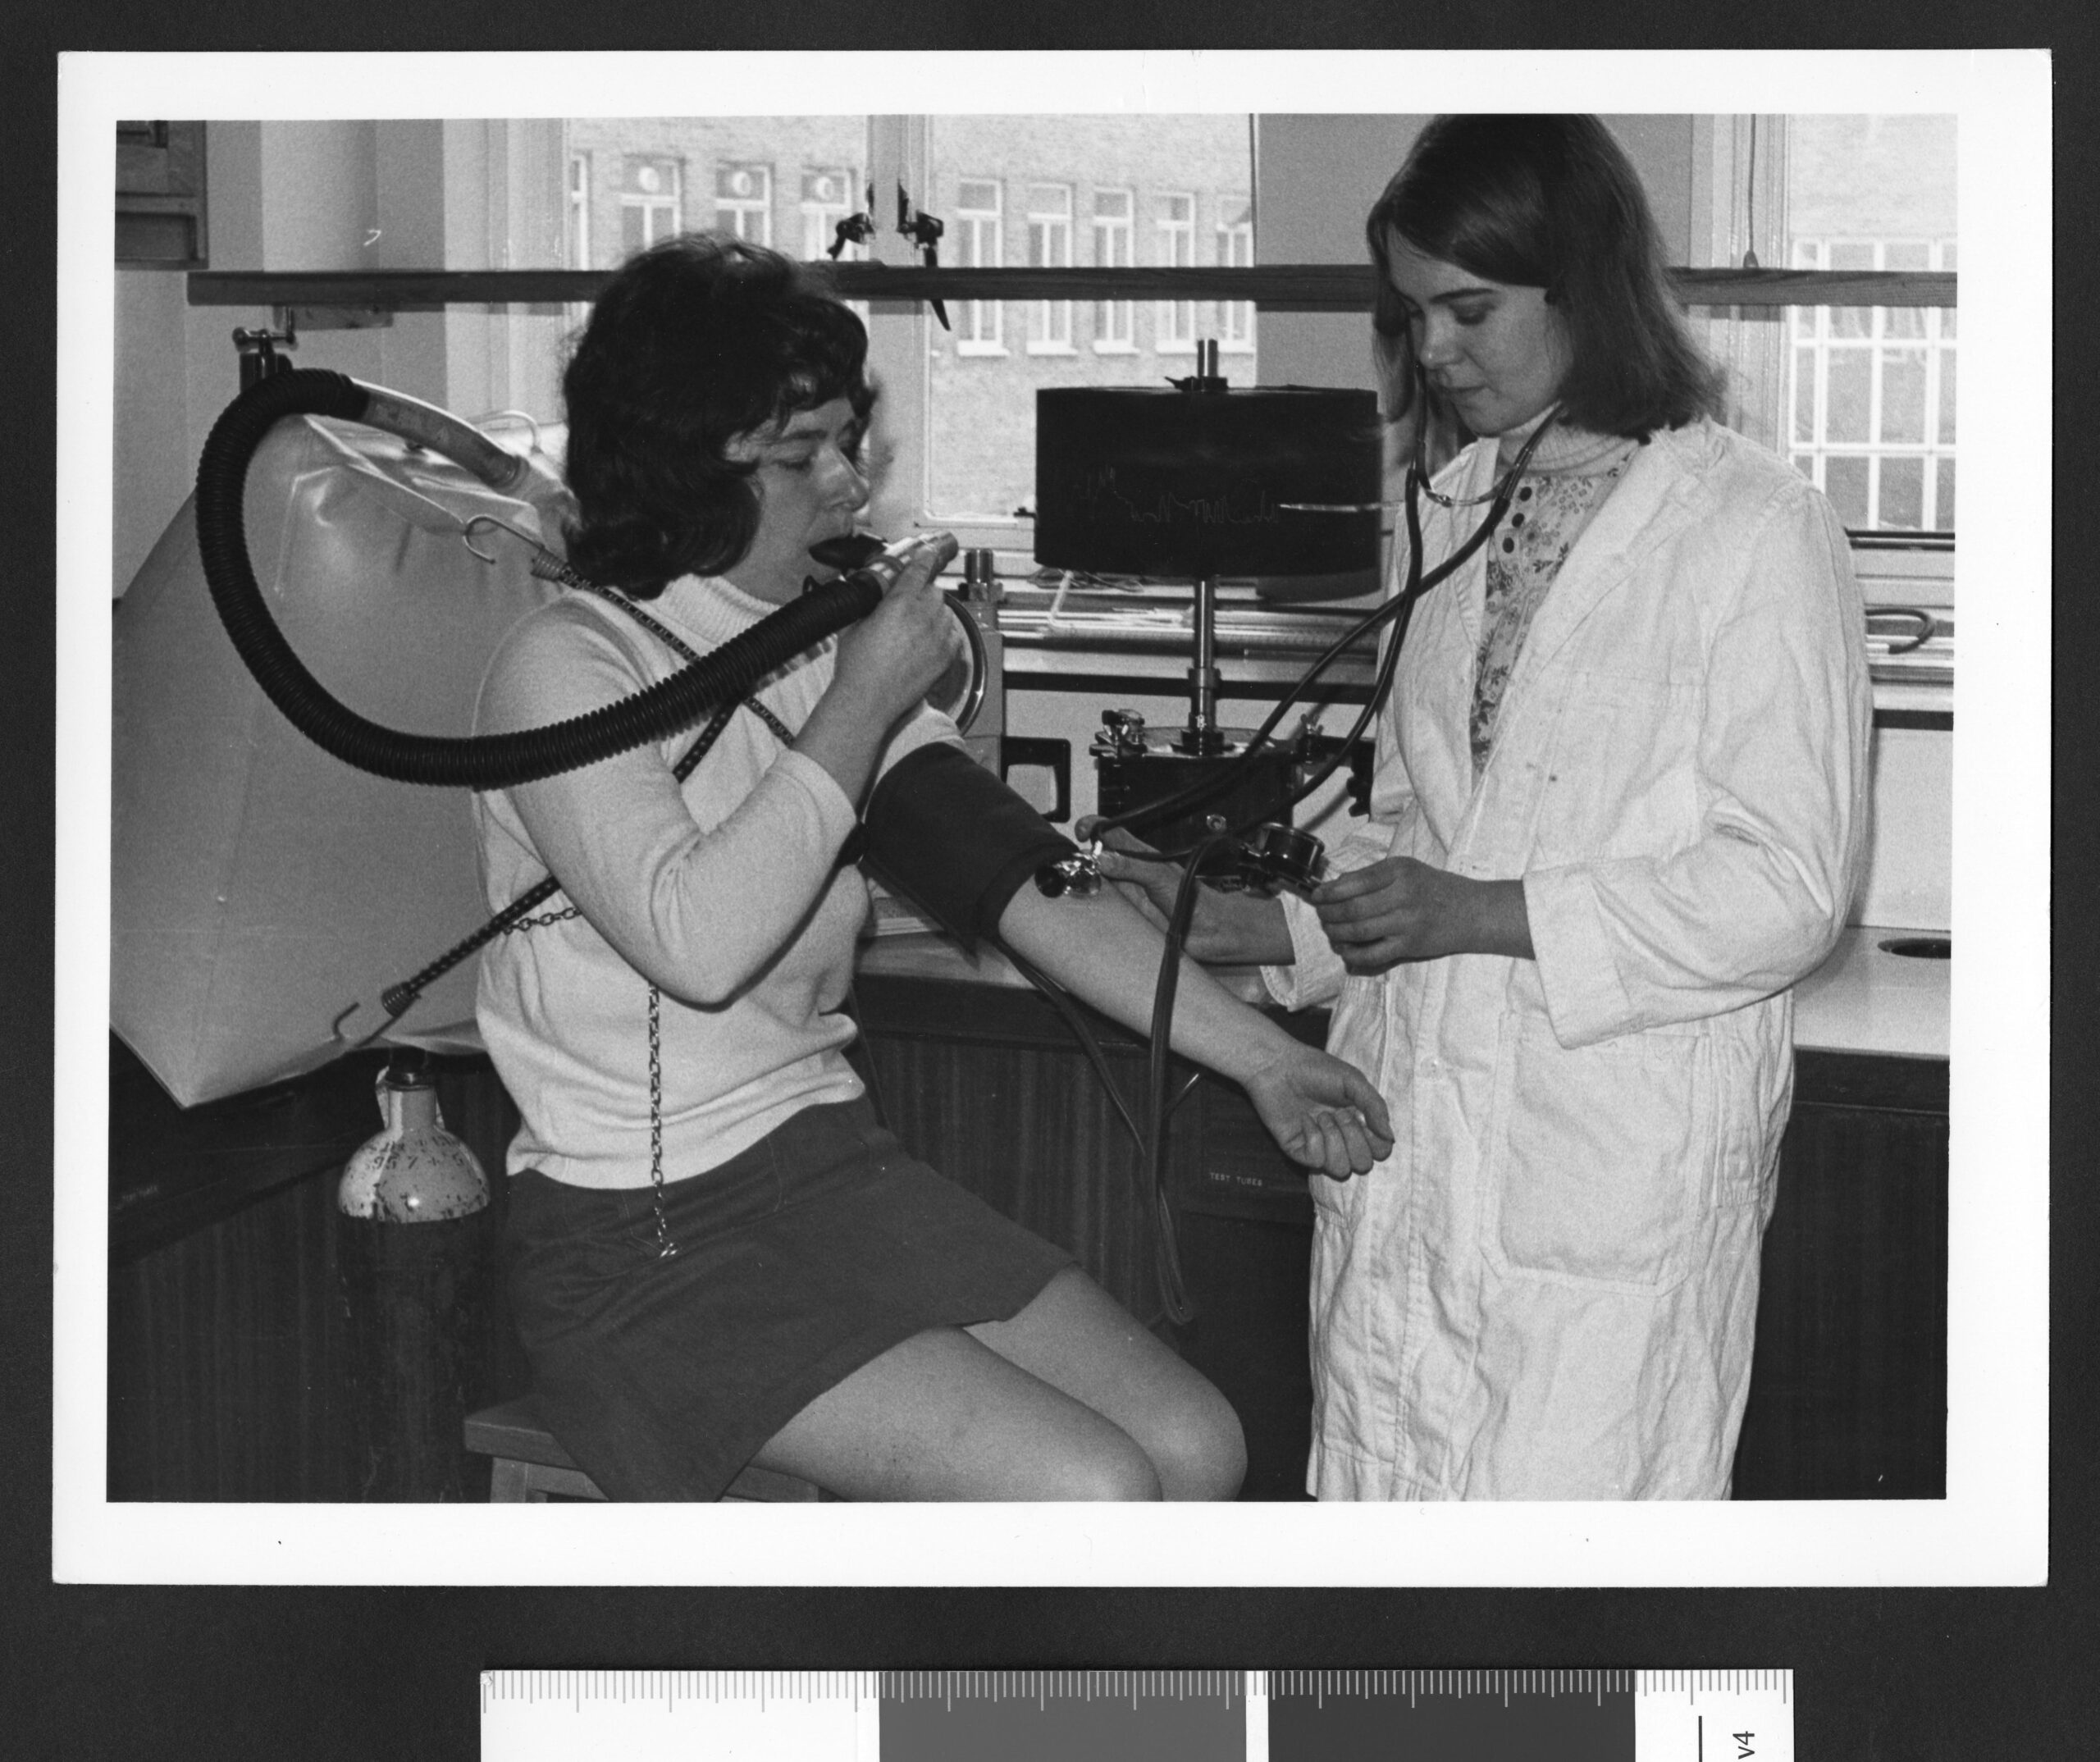 Respiration experiment 1970s